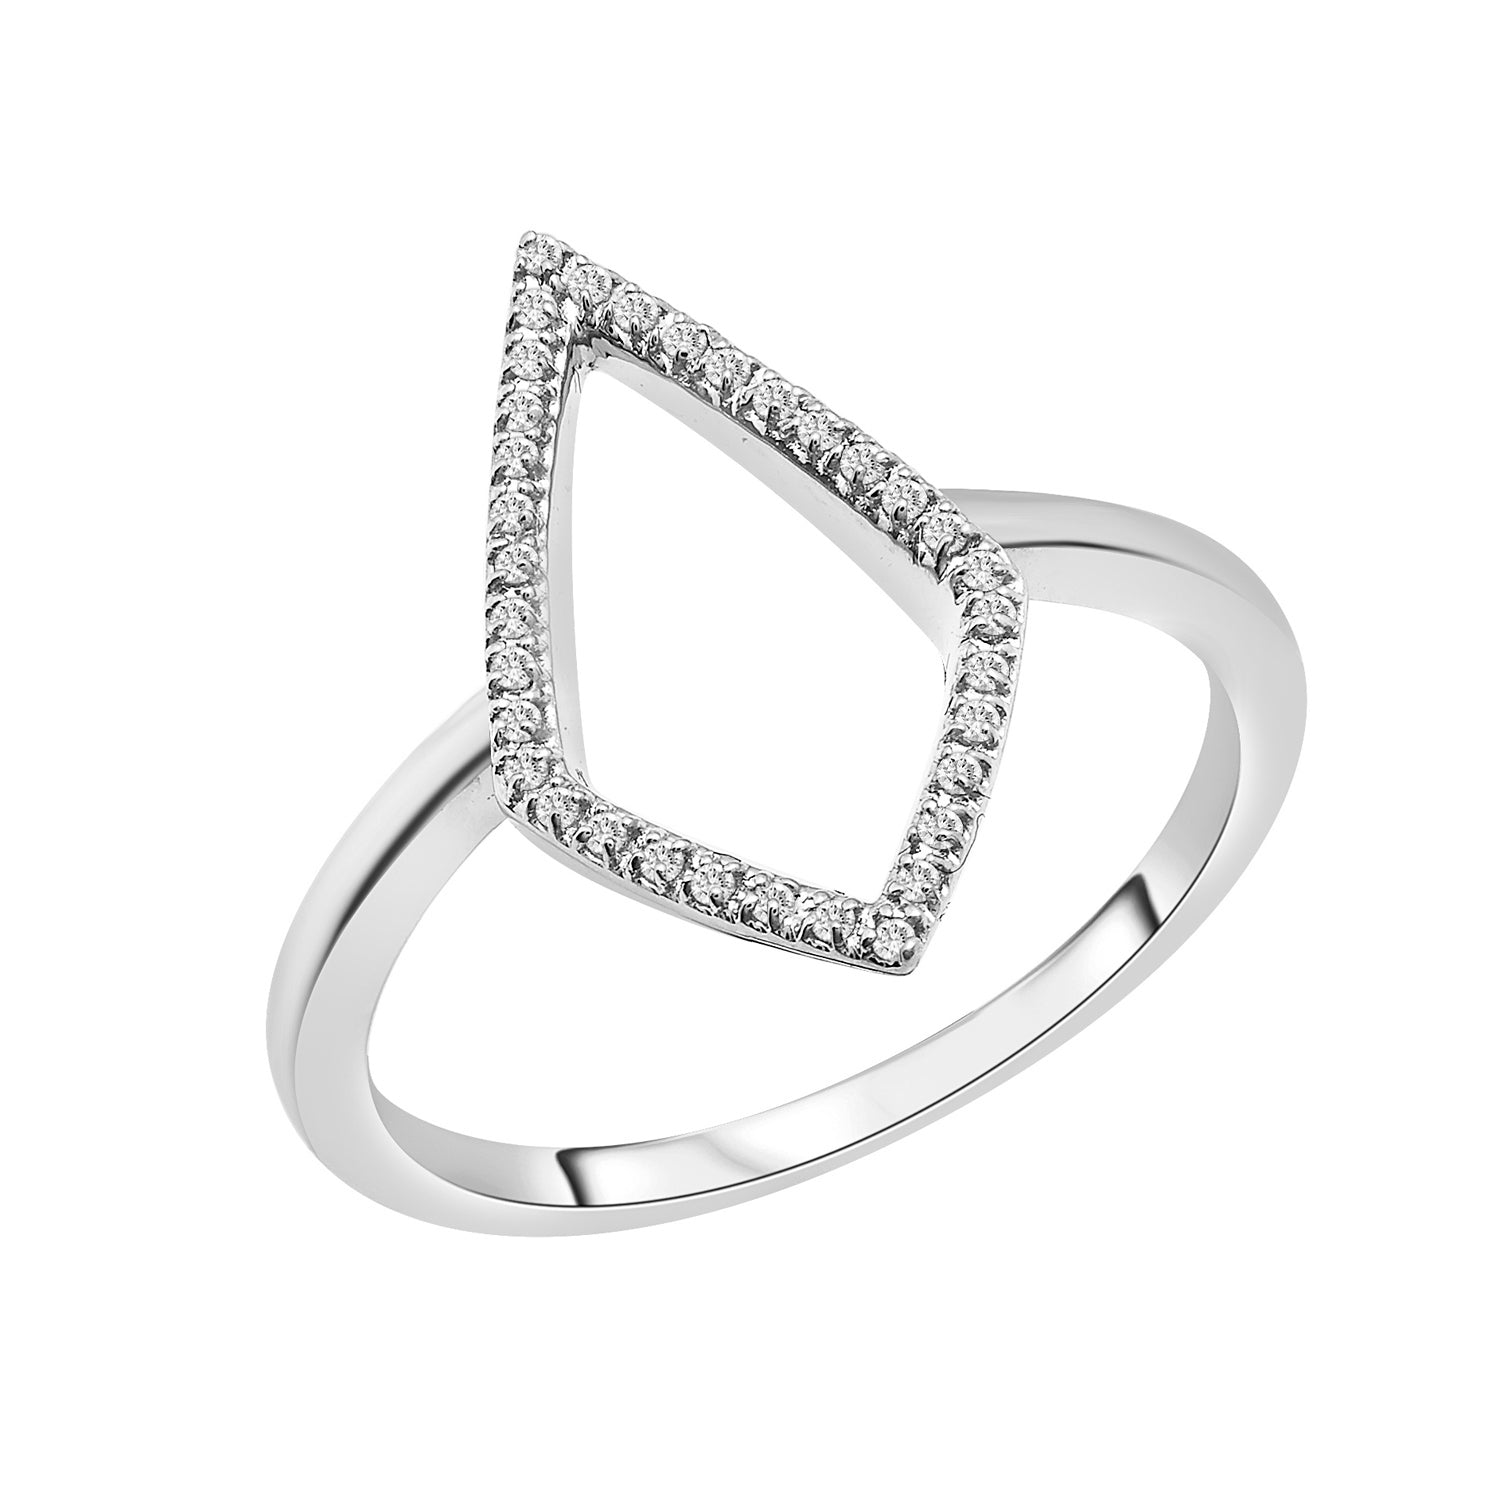 Rowan Open Shape Diamond Ring in White Gold